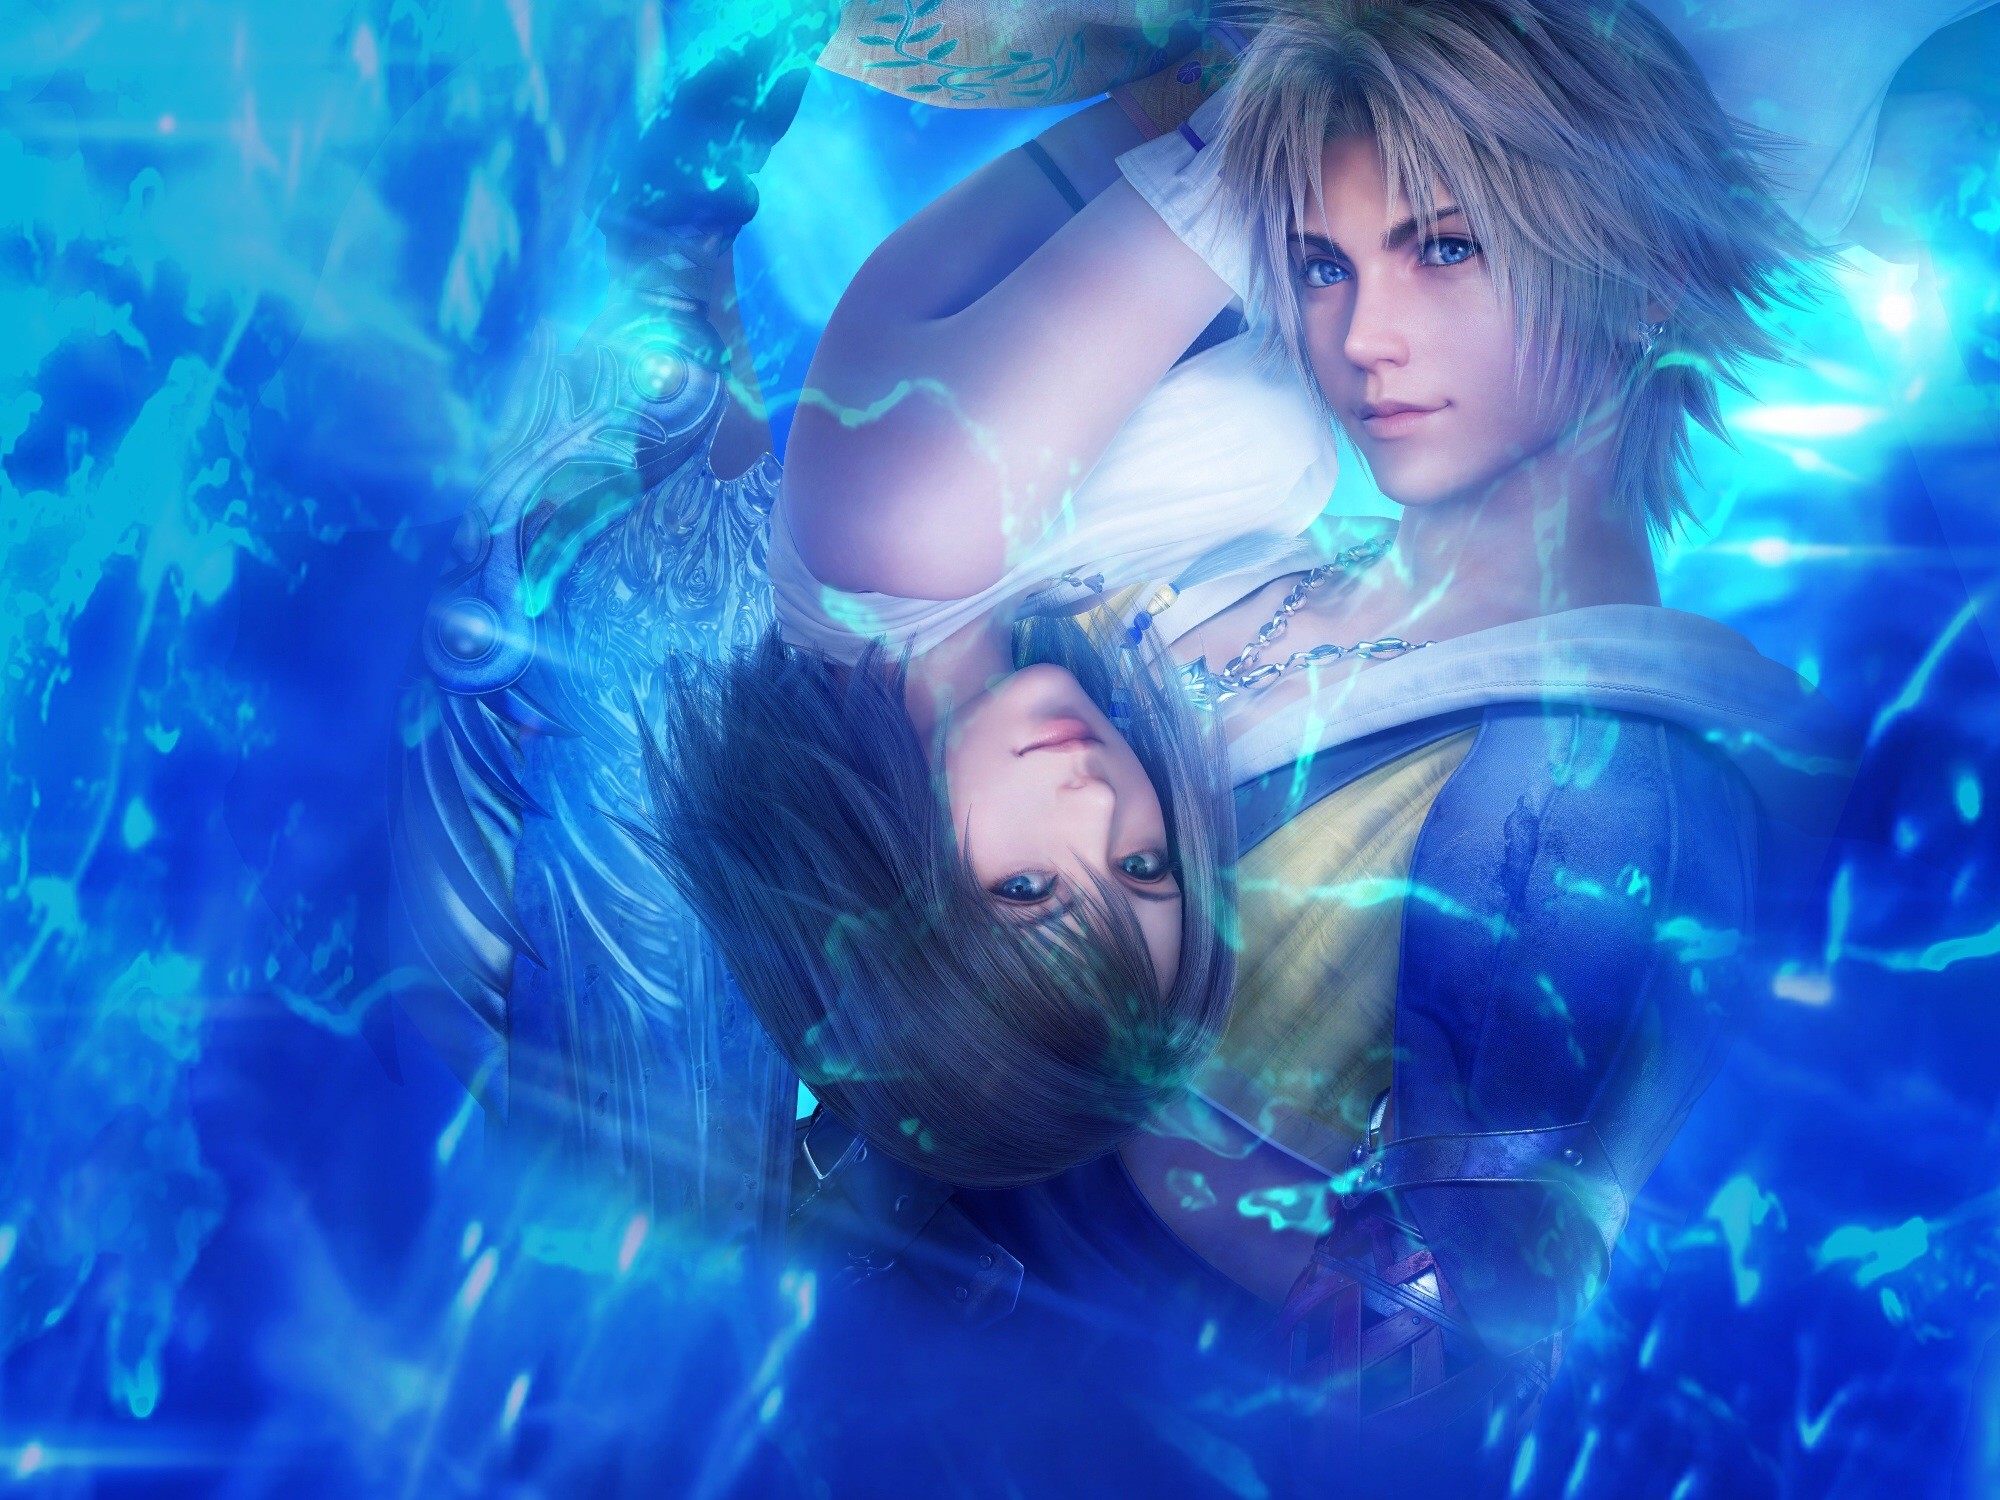 Final Fantasy X Wallpaper HD Image